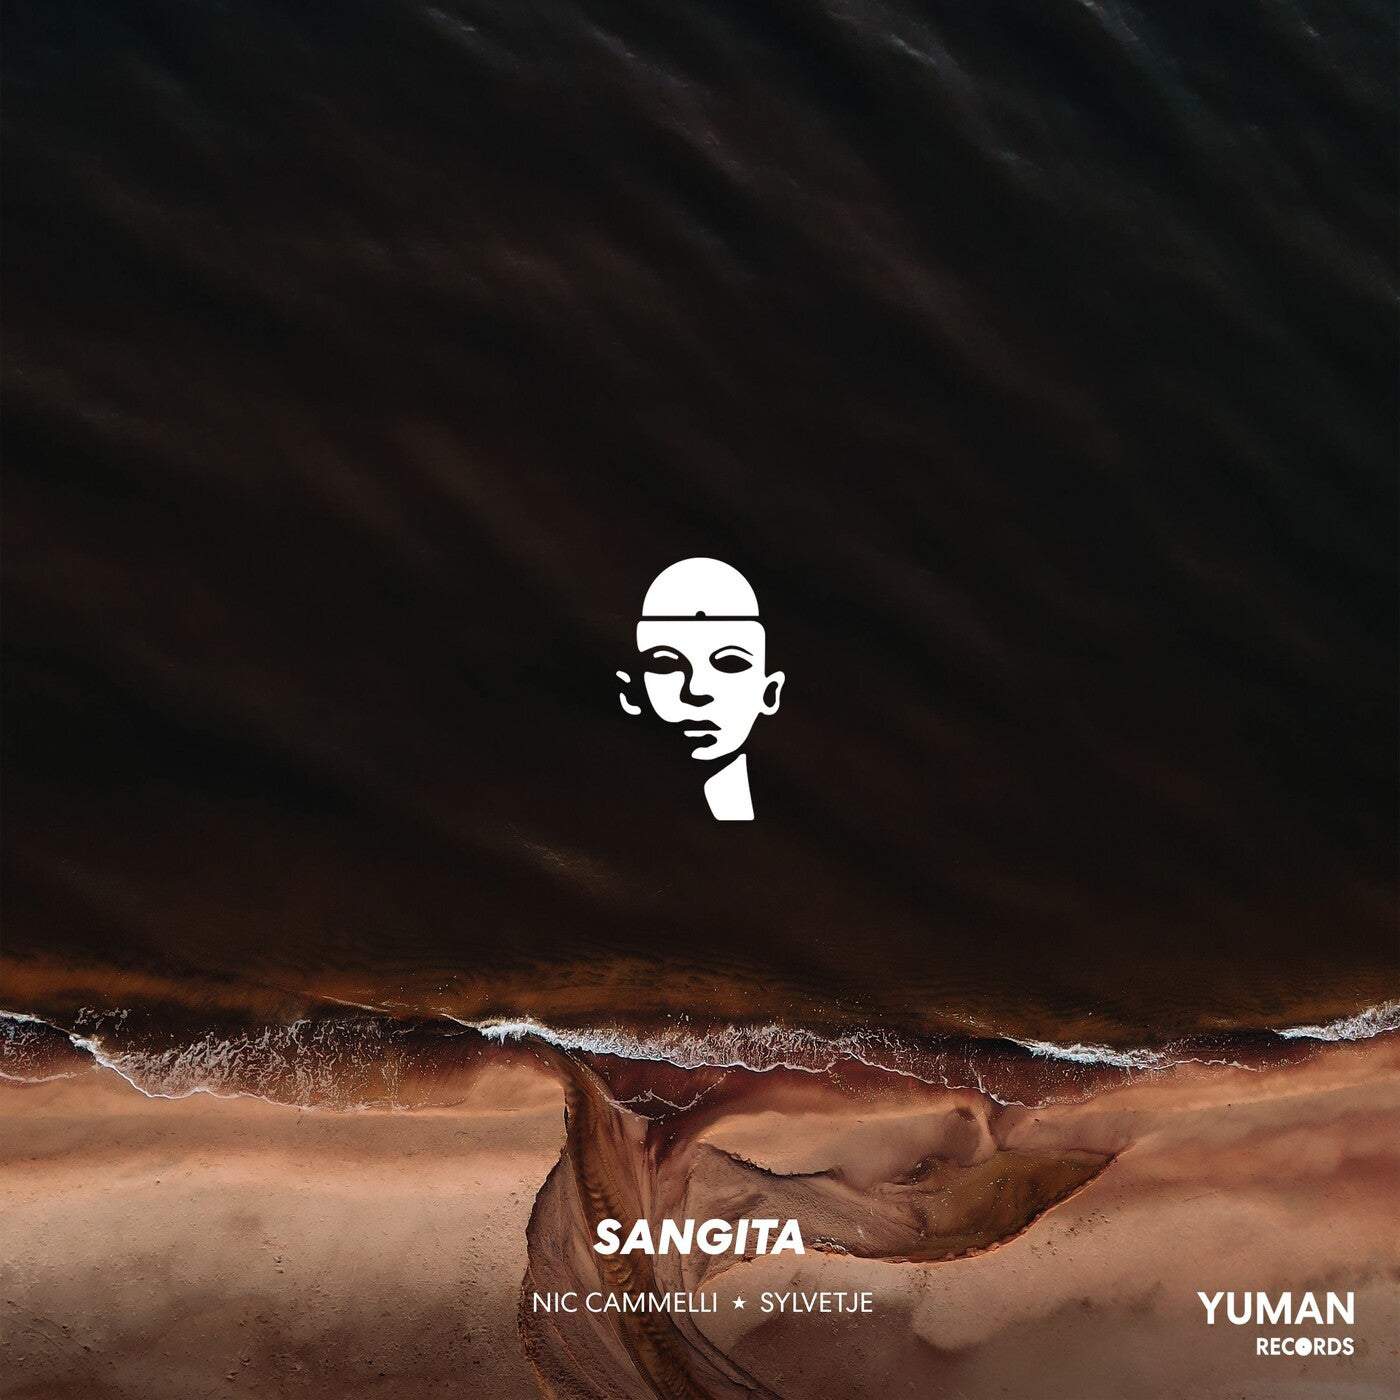 image cover: Nic Cammelli, Sylvetje - Sangita (Original Mix) / YUMANRECORDS001